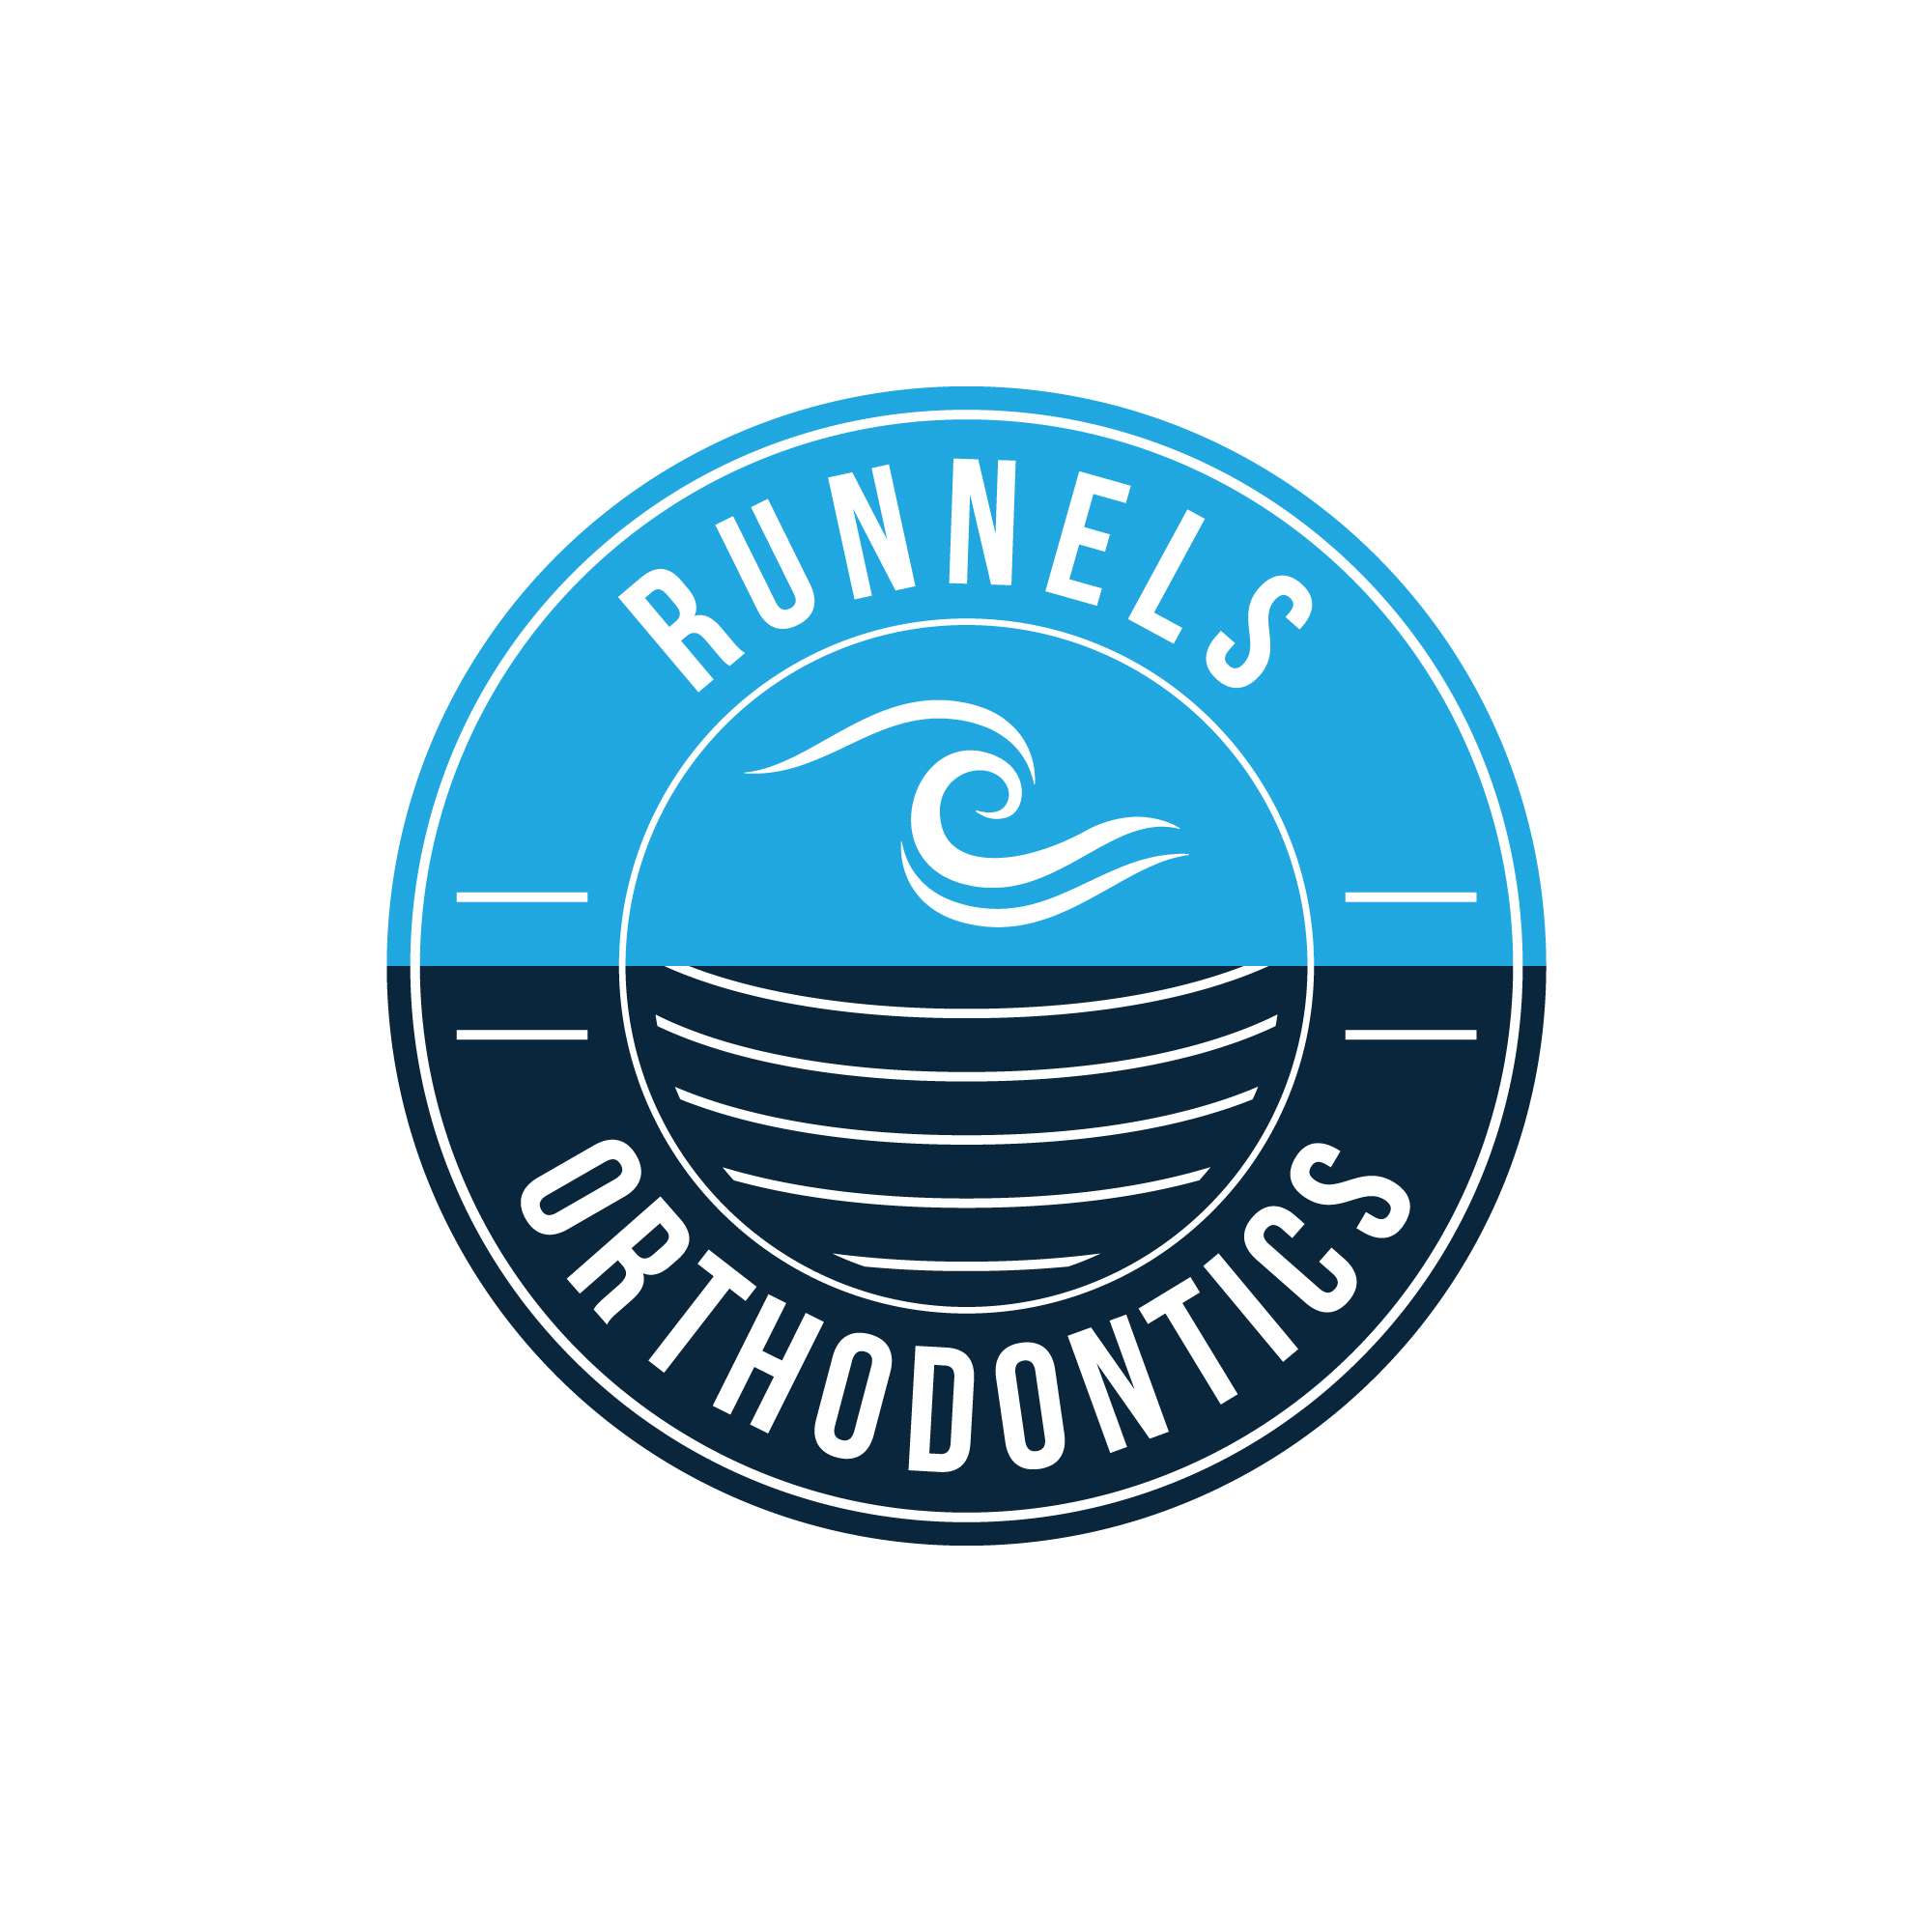 Copy of Runnels-Orthodontics-logo